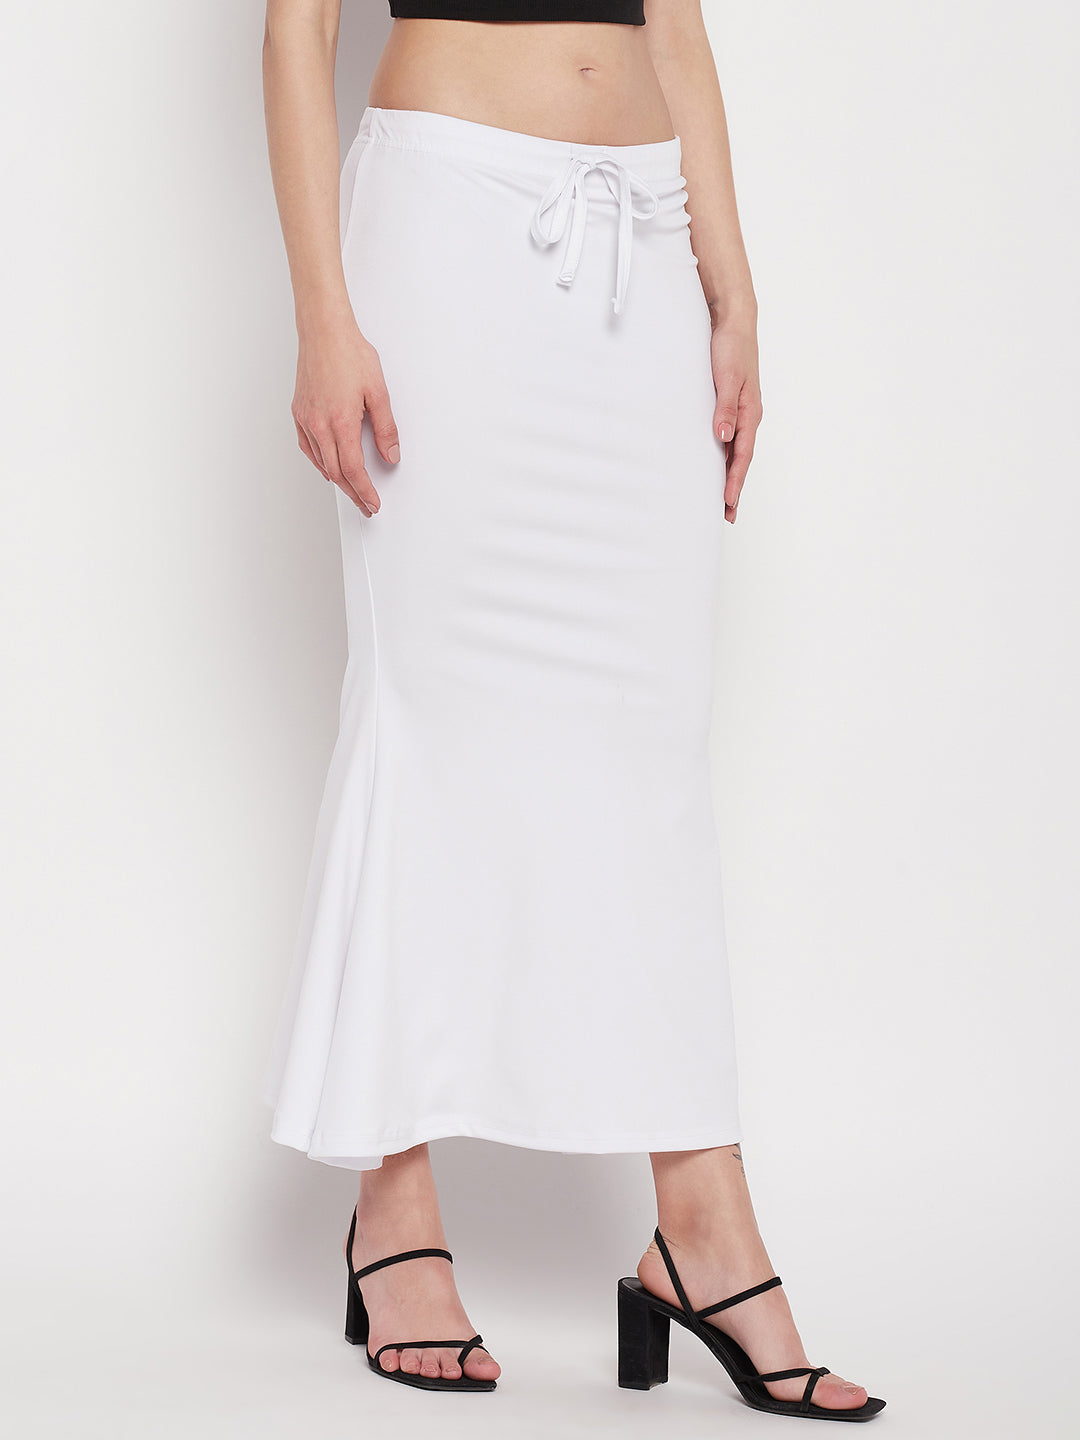 Buy Ash Grey Cotton Lycra Shapewear Saree Petticoat Online